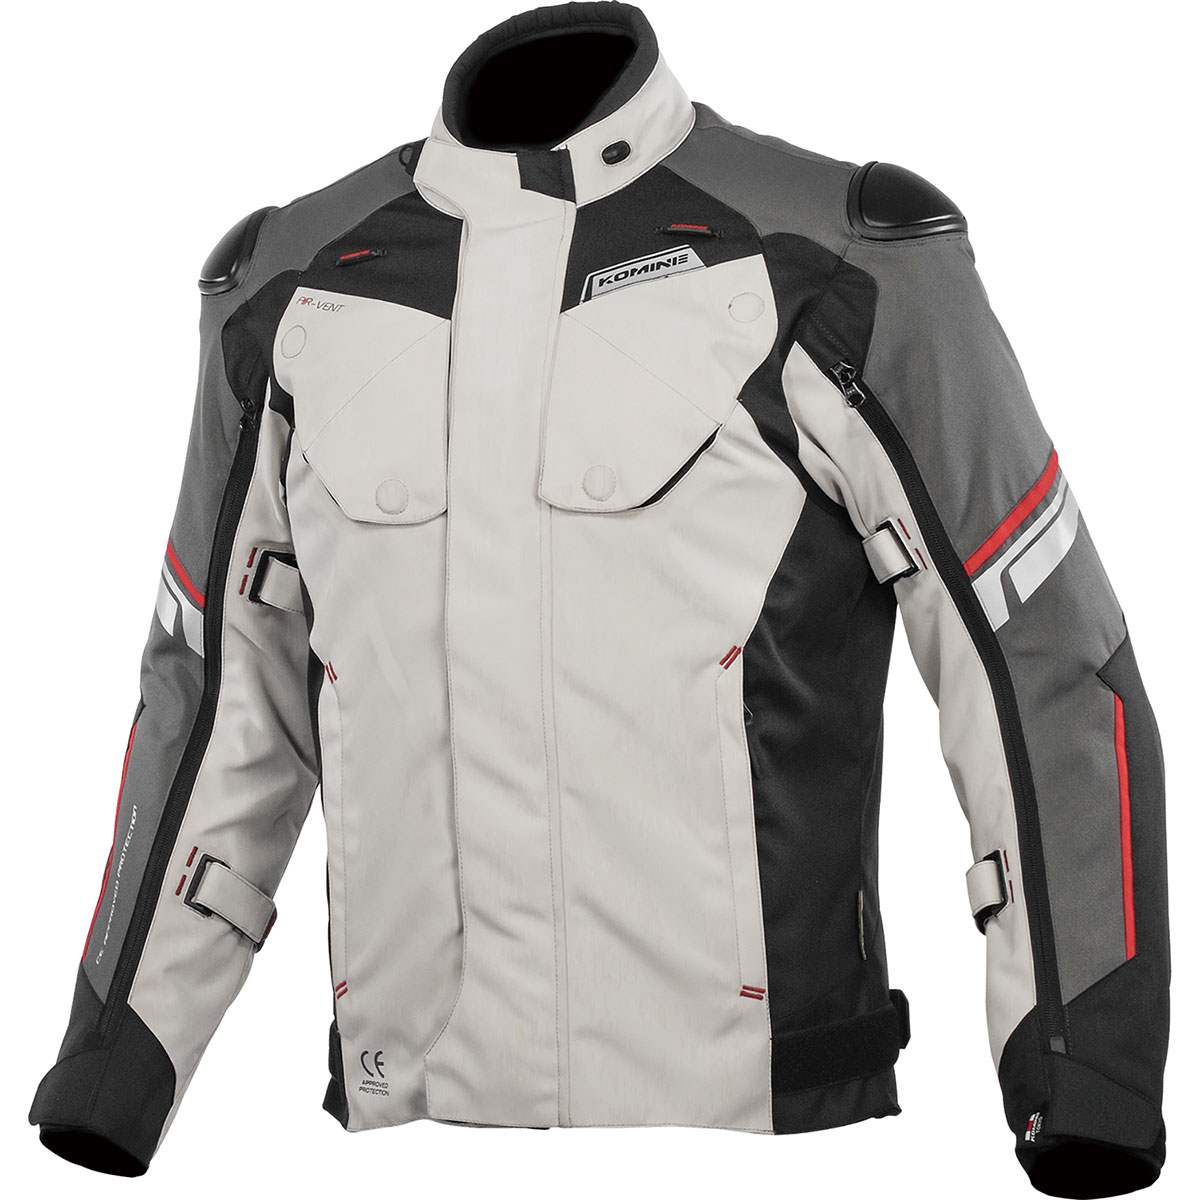 Komine JK-598 All Seasons Short Motorcycle Jacket for Sports & Touring